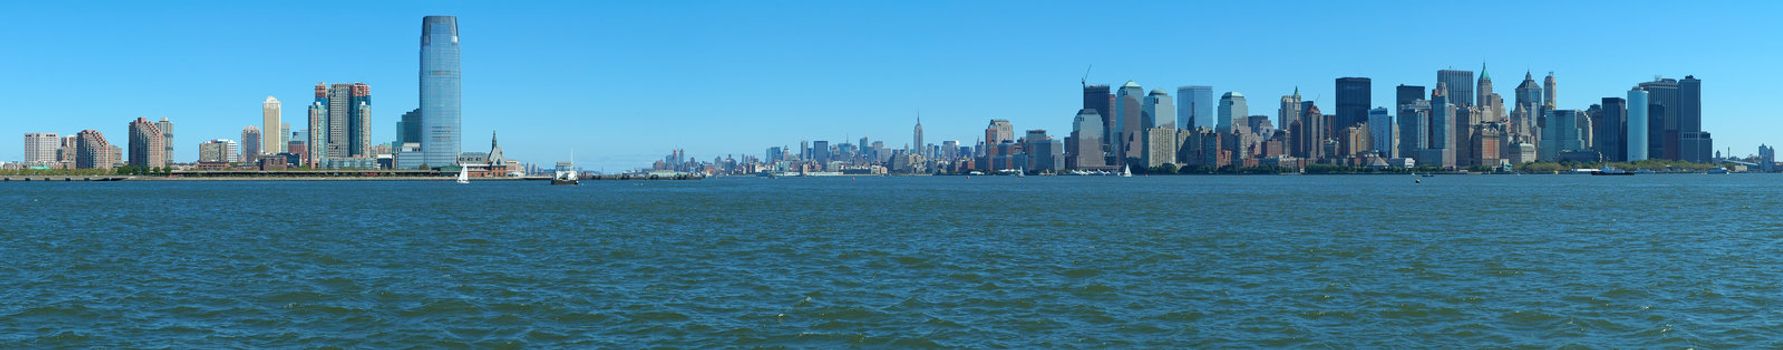 New York's Manhattan and Jersey City panorama photo, water in foreground